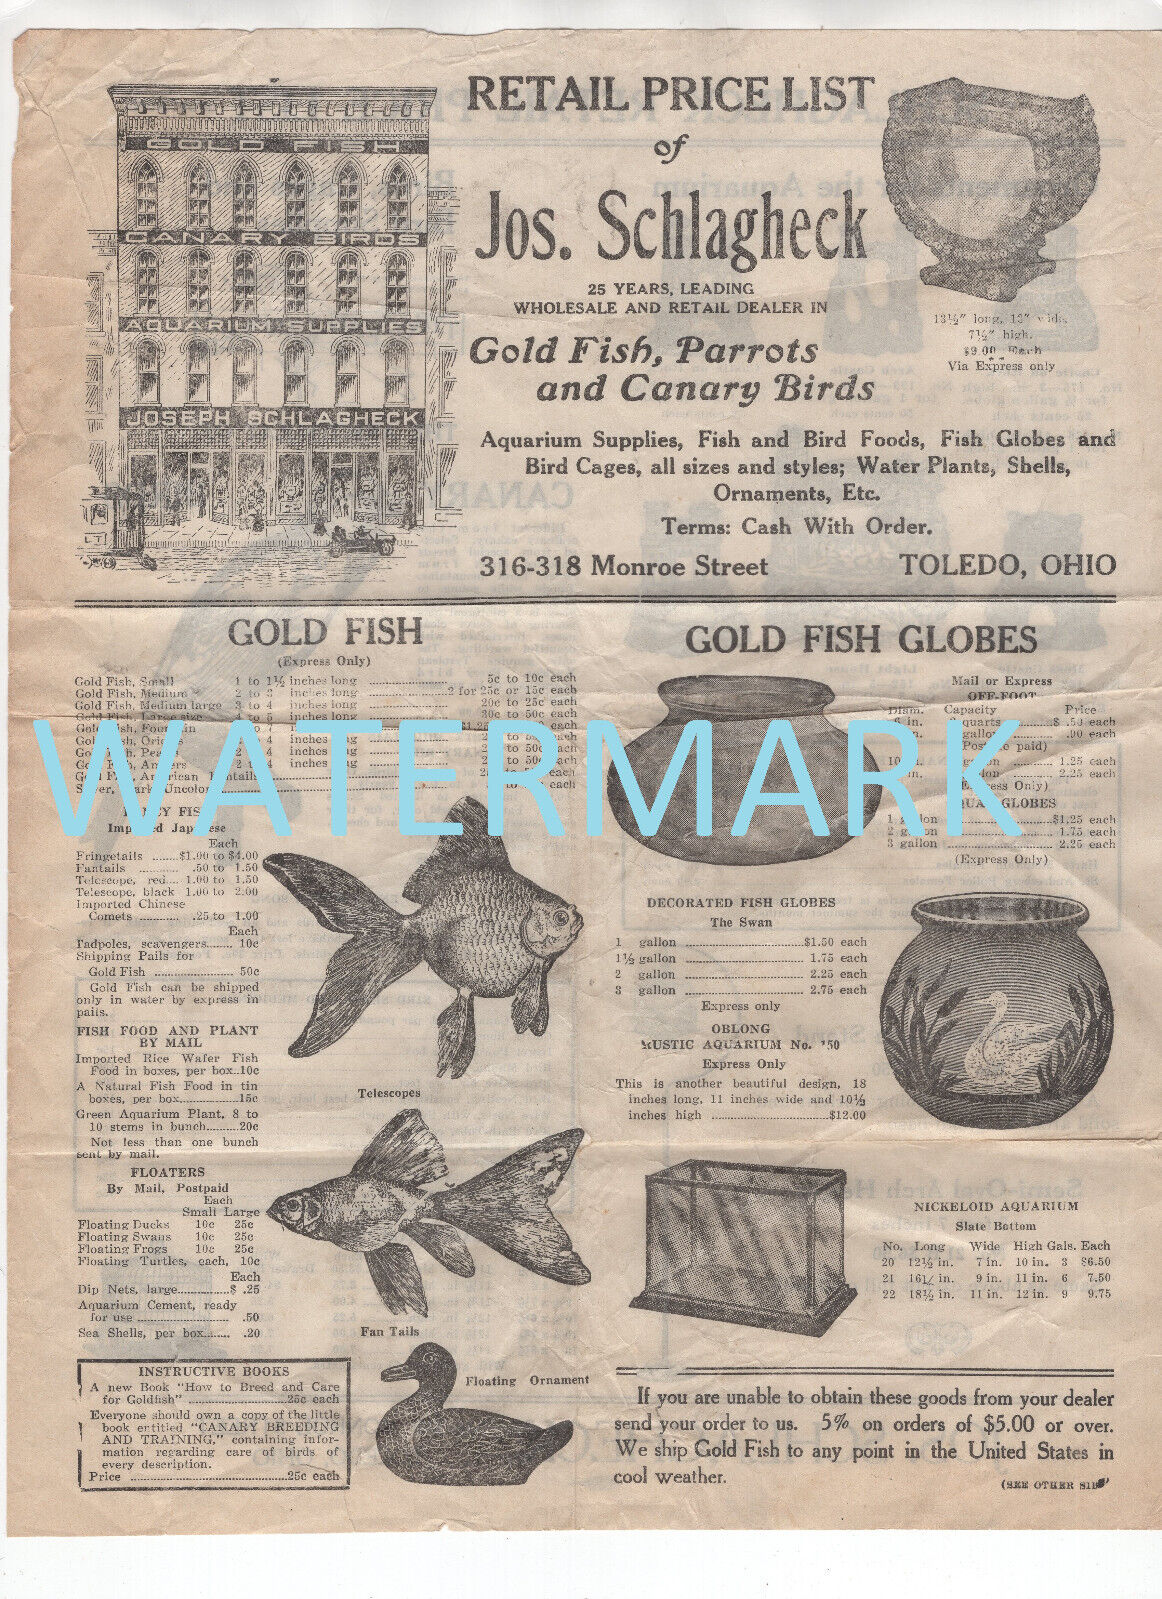 GREAT Antique Jos. Schlagheck Gold Fish Parrot Bird Pet Store Price List Leaflet